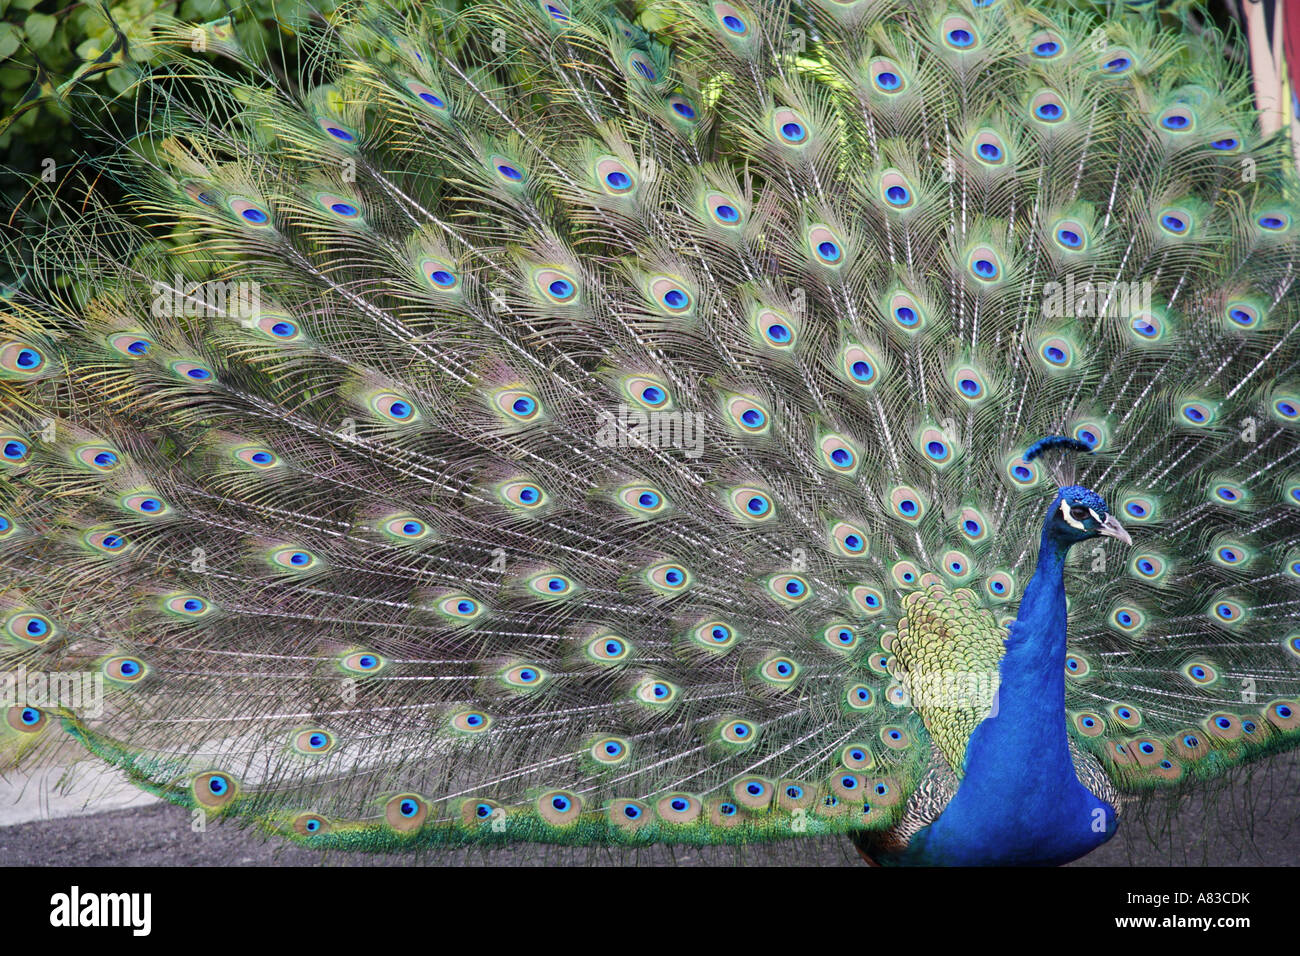 A Peacock at the San Diego Zoo in Balboa Park San Diego California Stock Photo